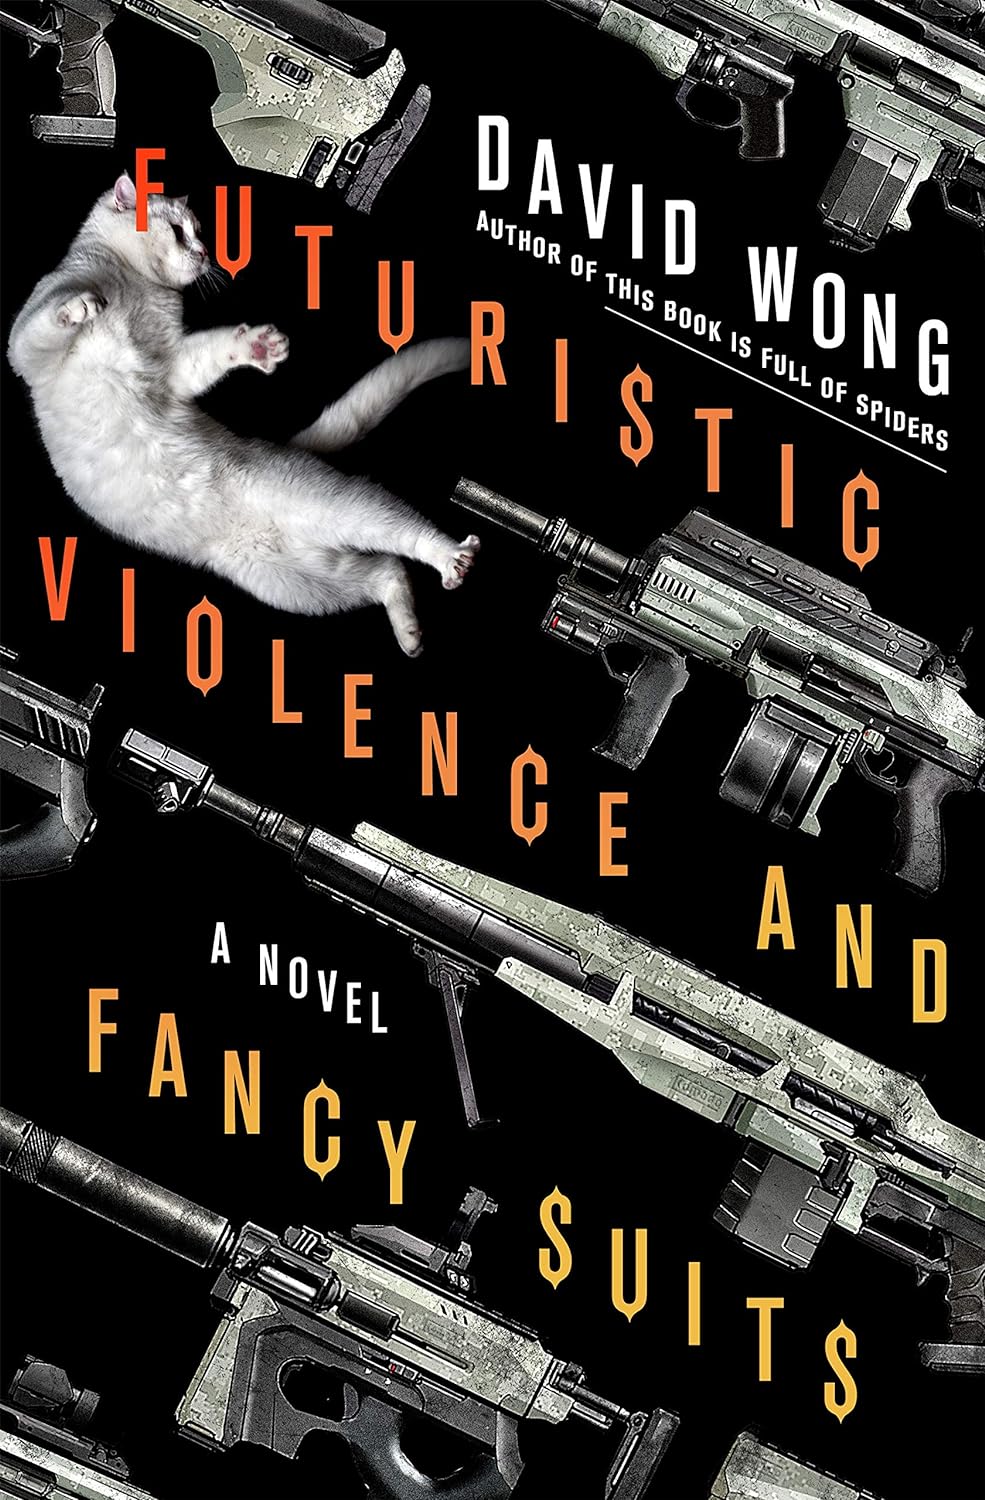 David Wong, Jason Pargin: Futuristic Violence and Fancy Suits (2016, St. Martin's Griffin)